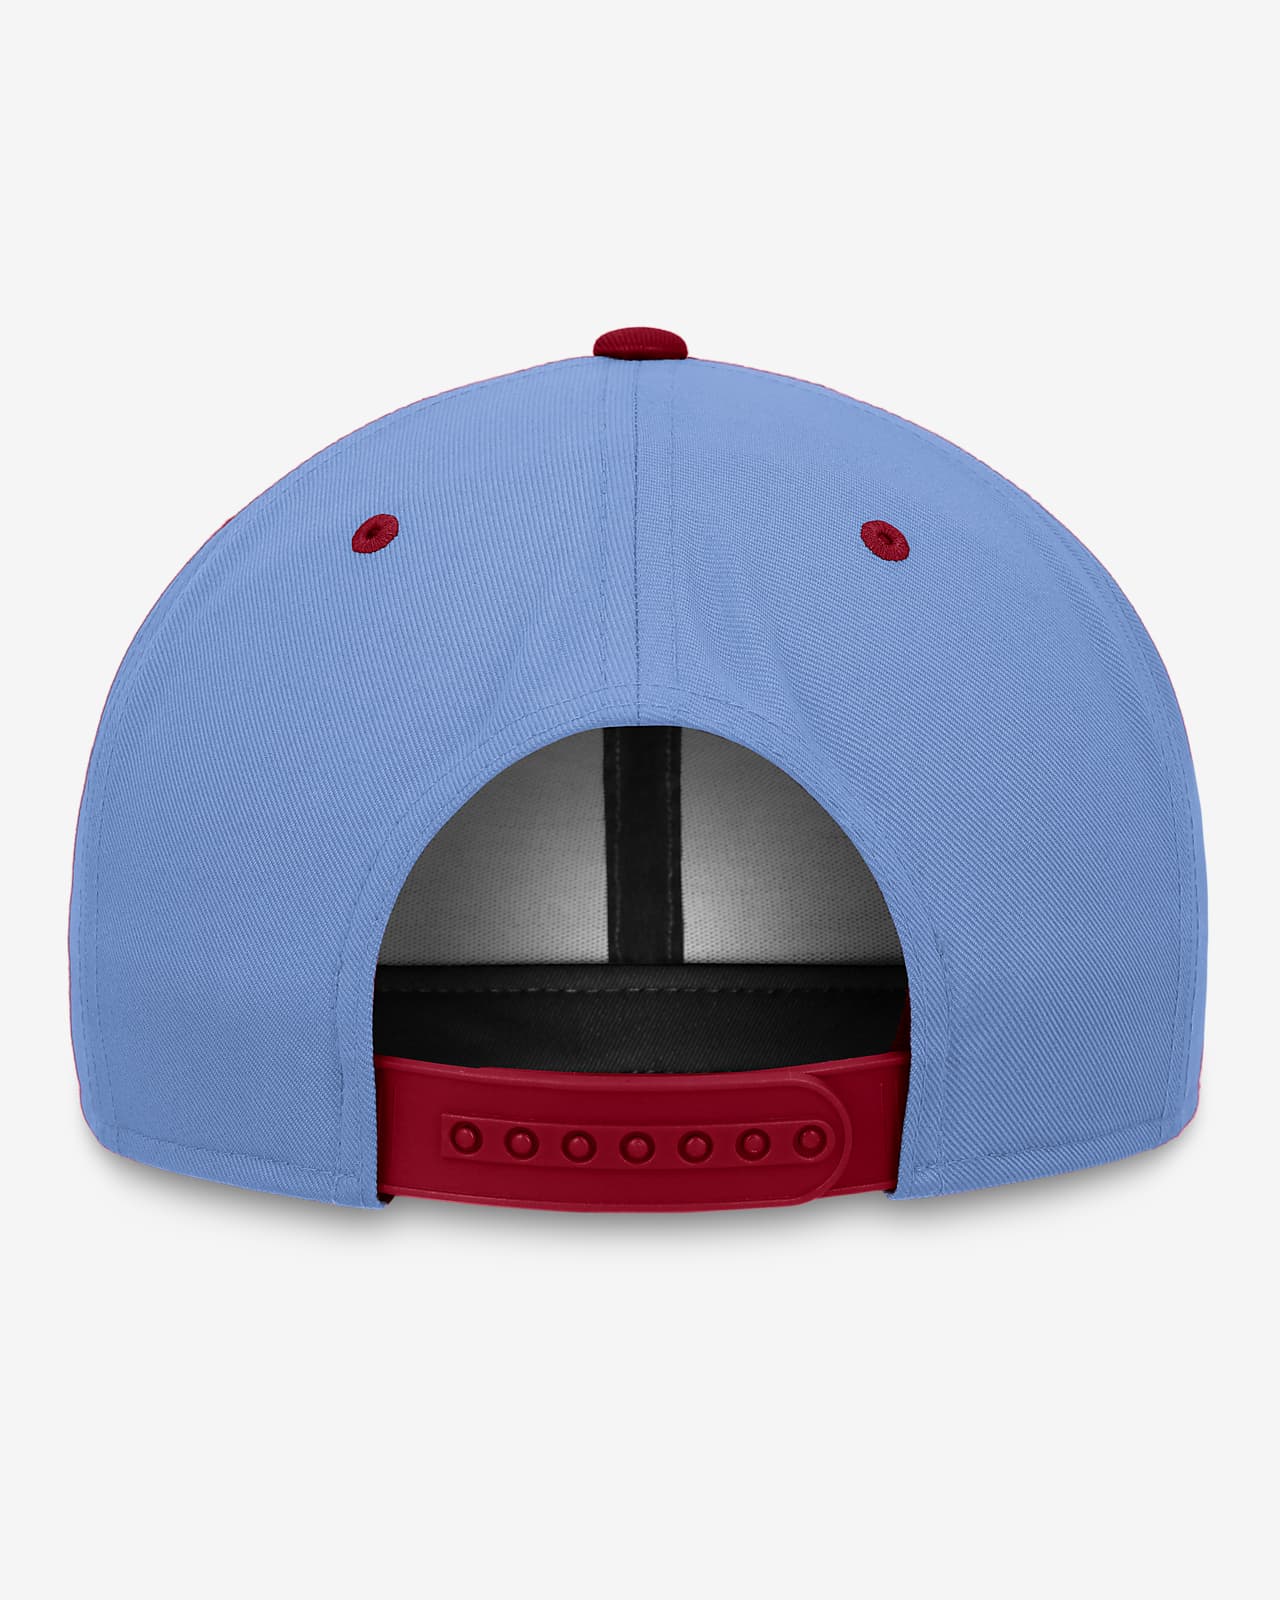 New York Yankees Pro Cooperstown Men's Nike MLB Adjustable Hat.